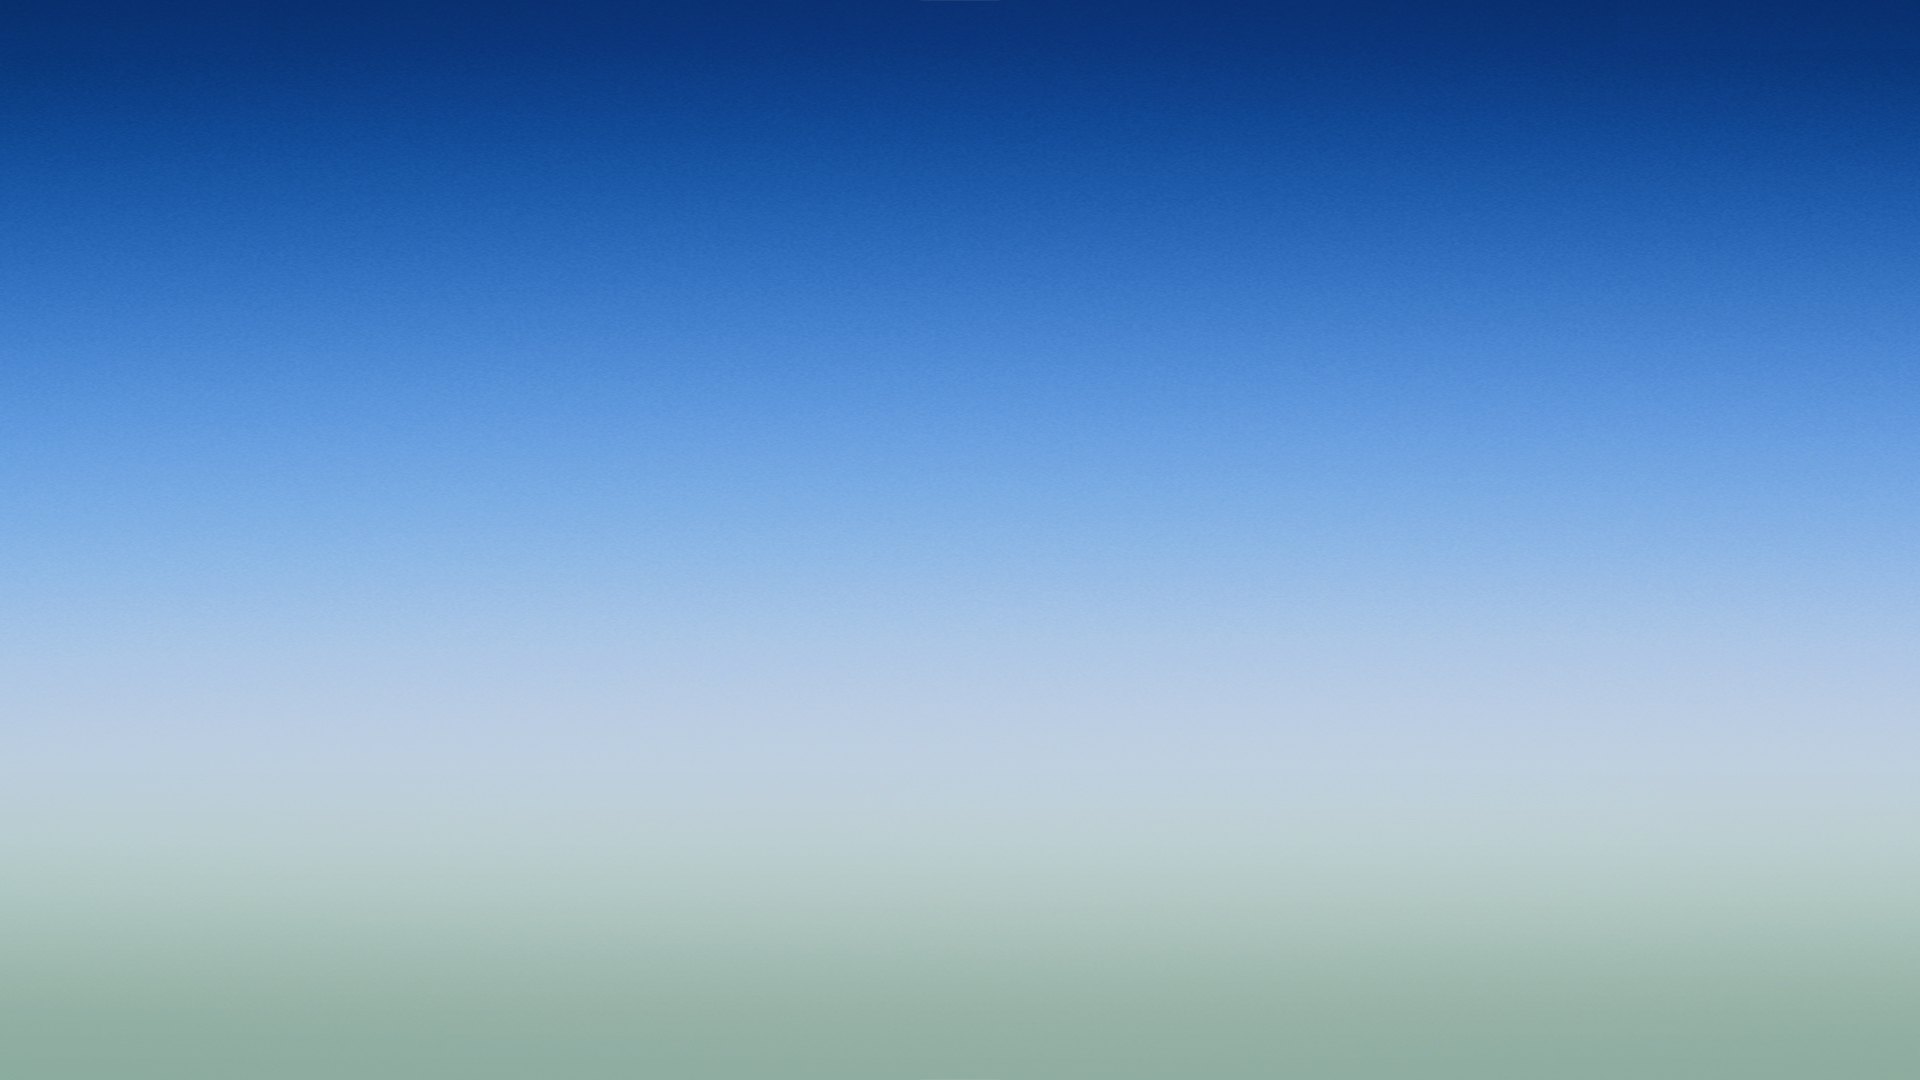 fonds d'écran hd pour ipad air 2,bleu,ciel,jour,aqua,atmosphère